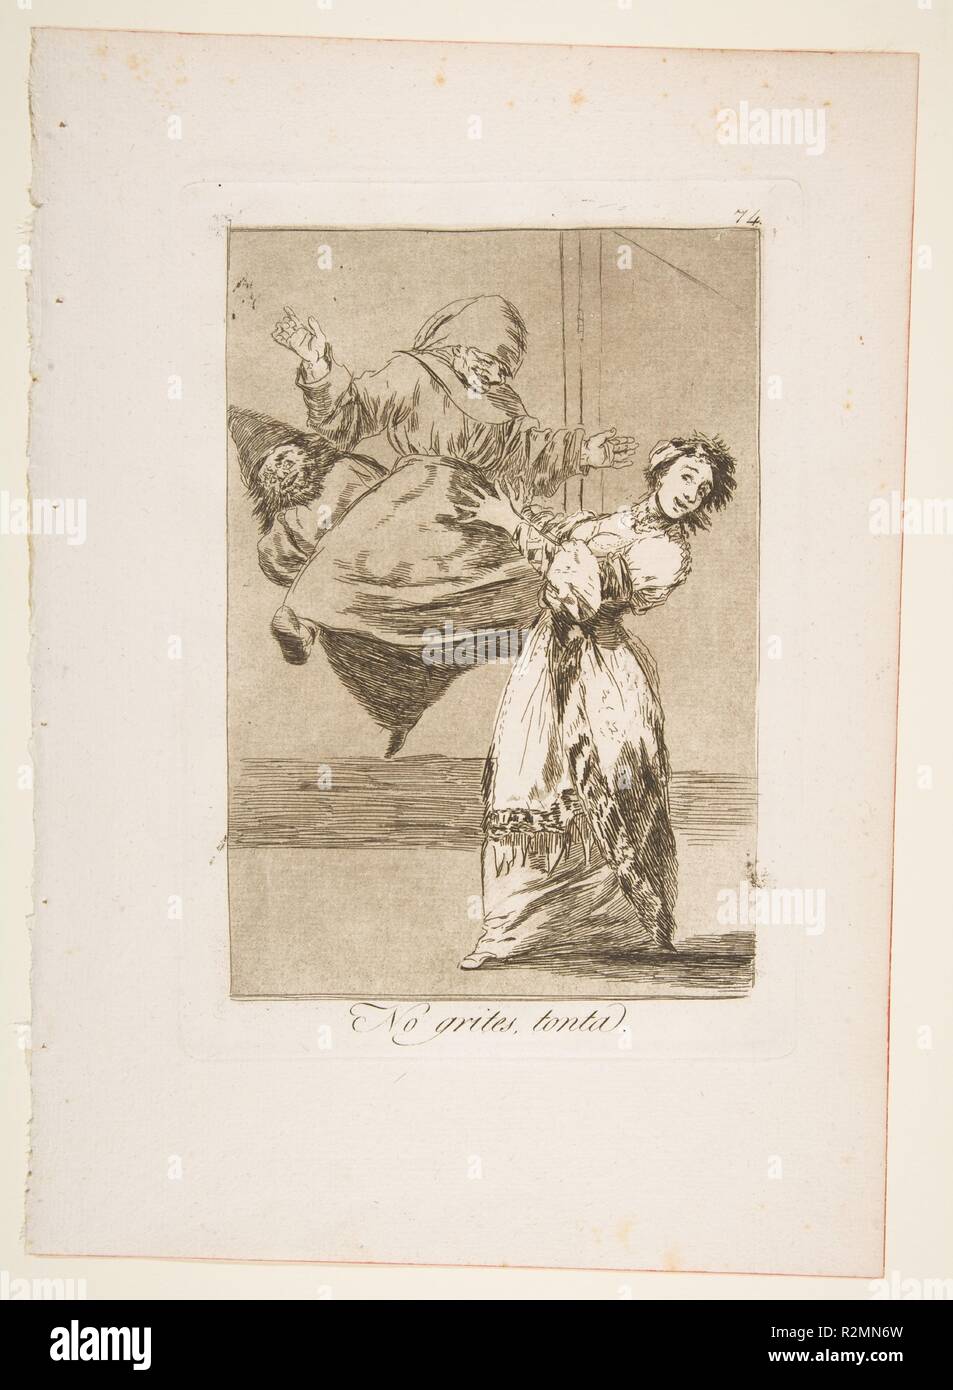 Plate 74 from 'Los Caprichos': Don't scream, stupid (No grites, tonta). Artist: Goya (Francisco de Goya y Lucientes) (Spanish, Fuendetodos 1746-1828 Bordeaux). Dimensions: Plate: 8 3/8 × 5 7/8 in. (21.2 × 14.9 cm)  Sheet: 11 5/8 x 8 3/16 in. (29.5 x 20.8 cm). Series/Portfolio: Los Caprichos. Date: 1799. Museum: Metropolitan Museum of Art, New York, USA. Stock Photo